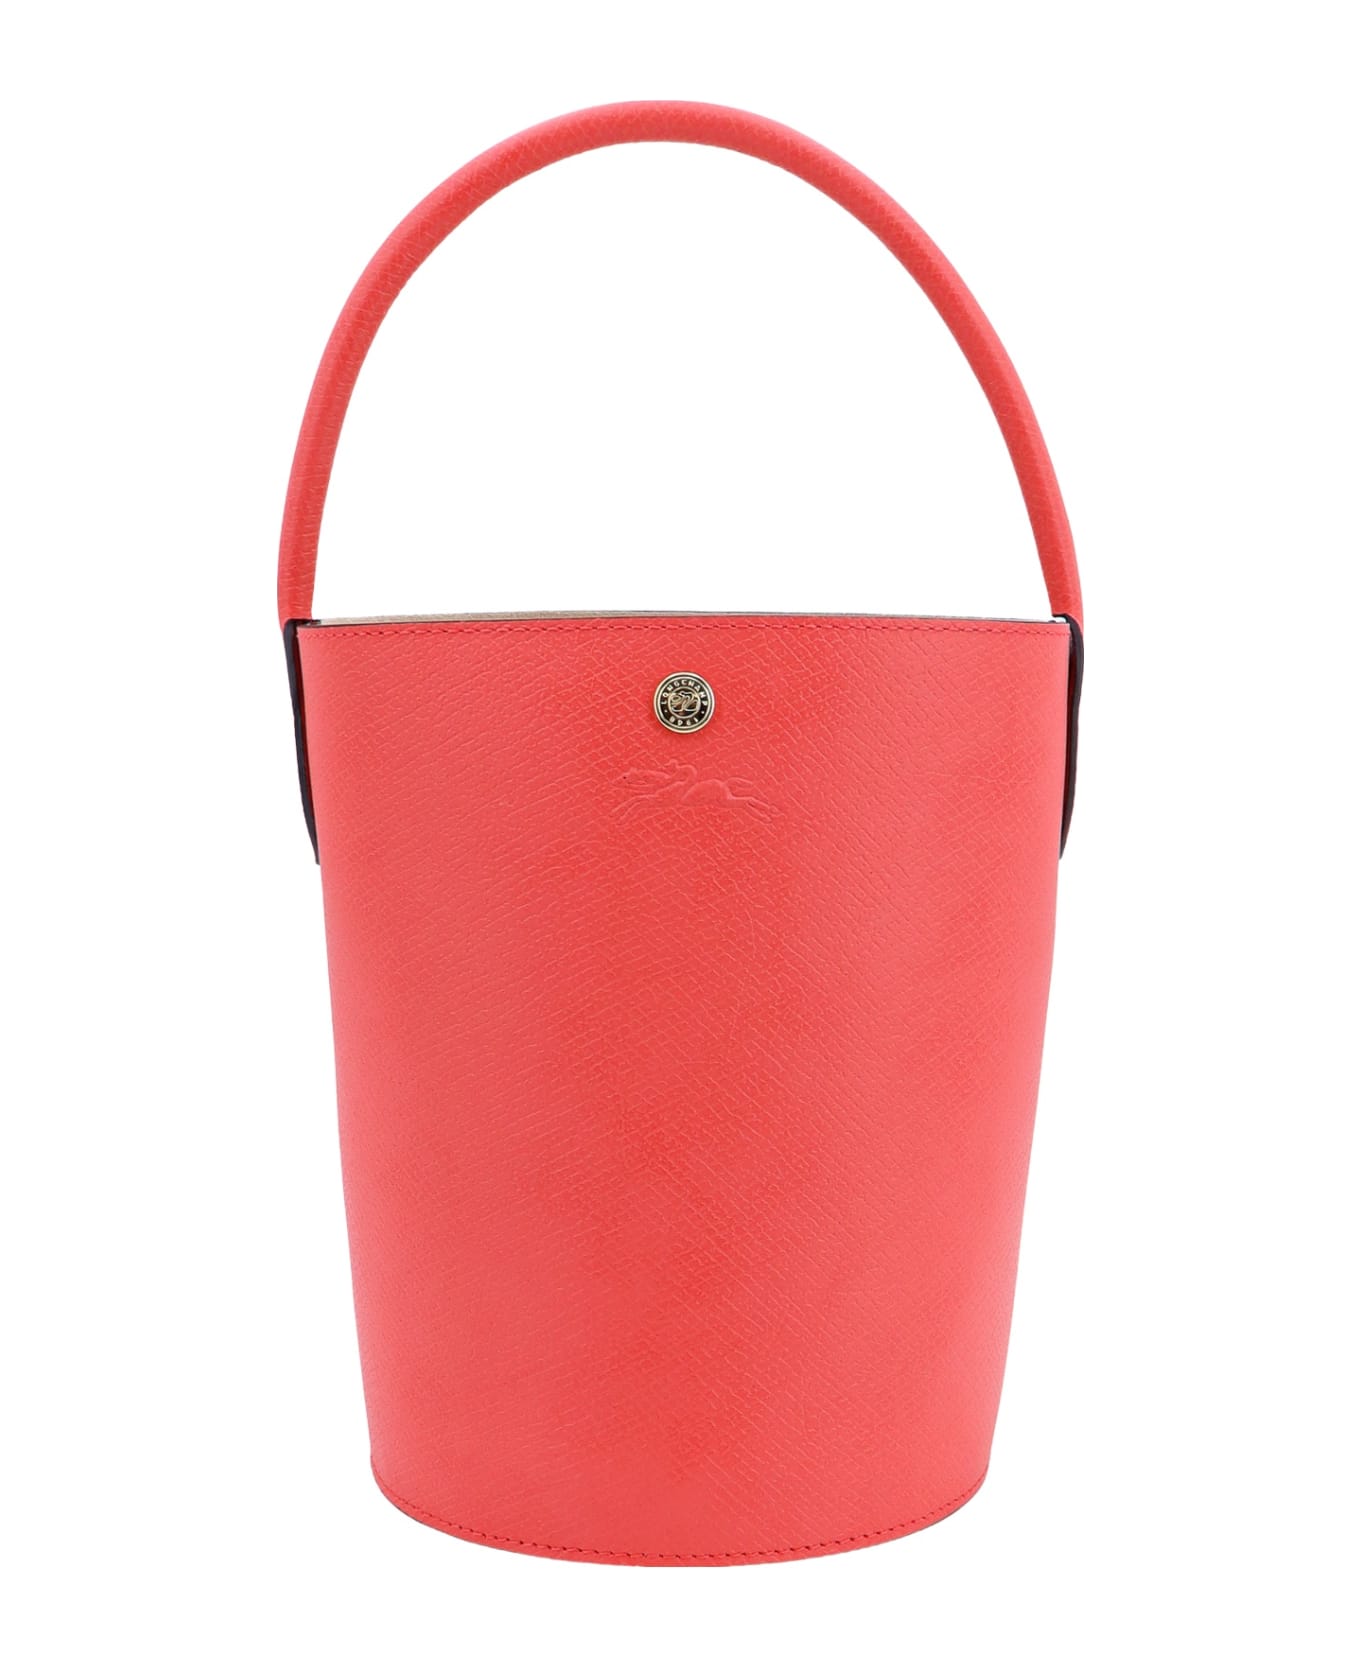 Longchamp Re Bucket Bag - FRAGOLA トートバッグ